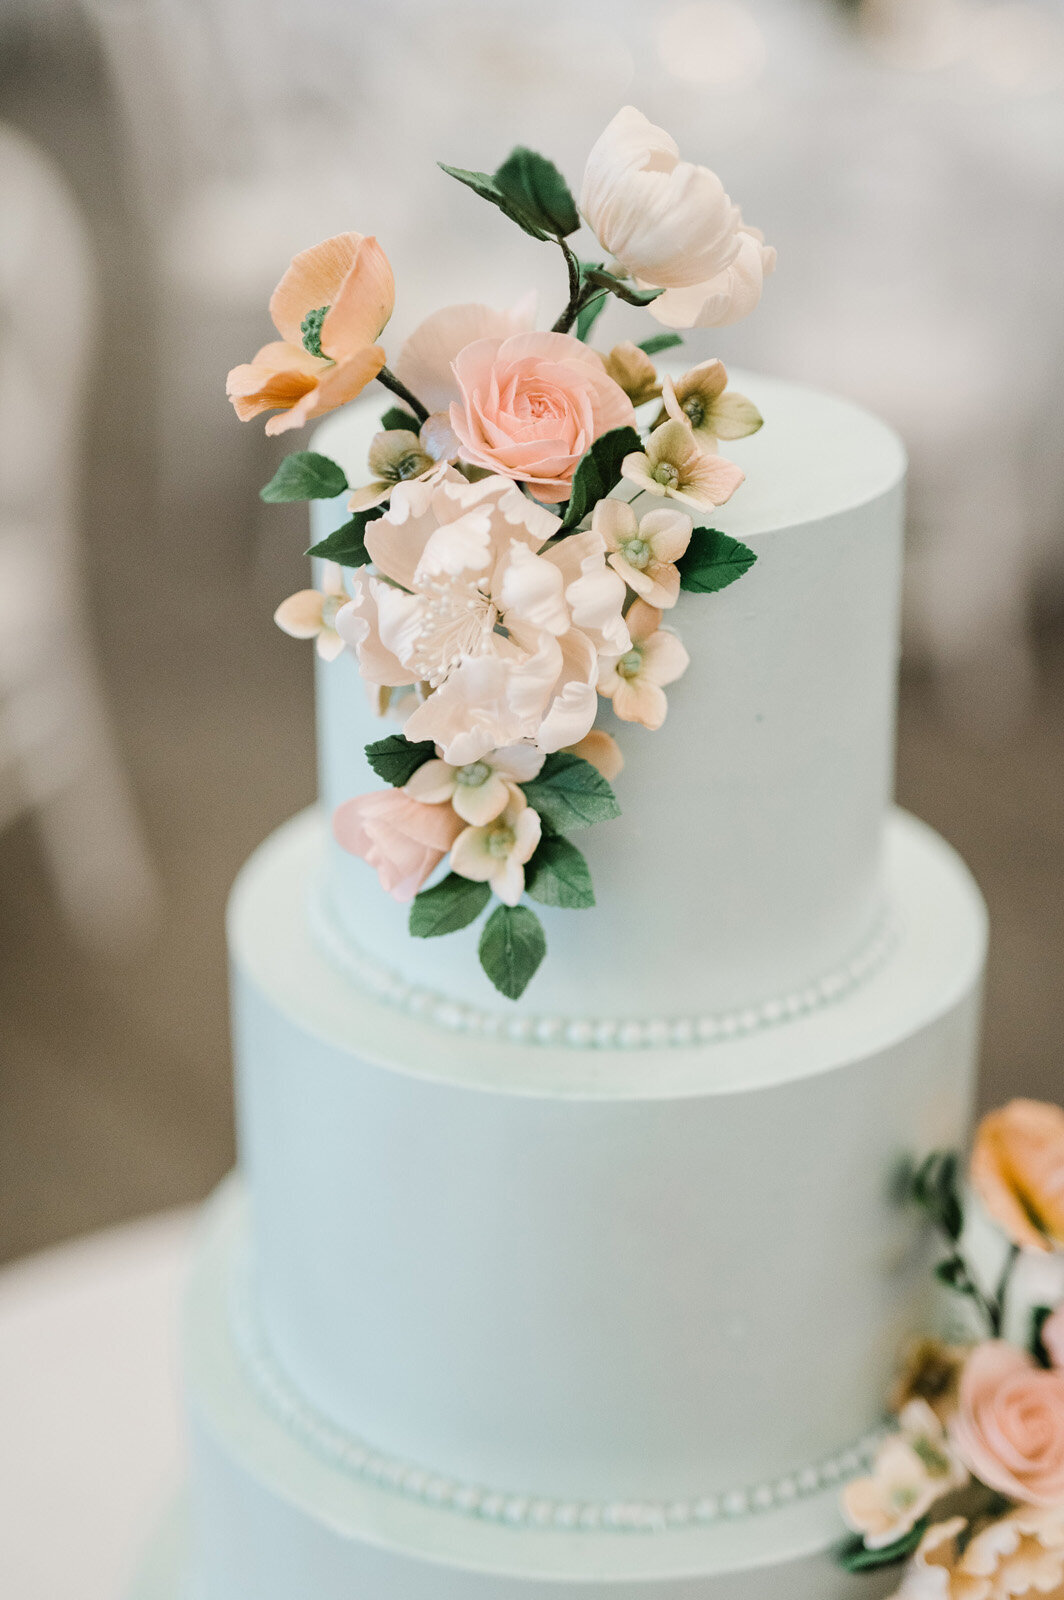 Kate-Murtaugh-Events-Newport-RI-Castle-Hill-Inn-sugar-flower-designer-cake